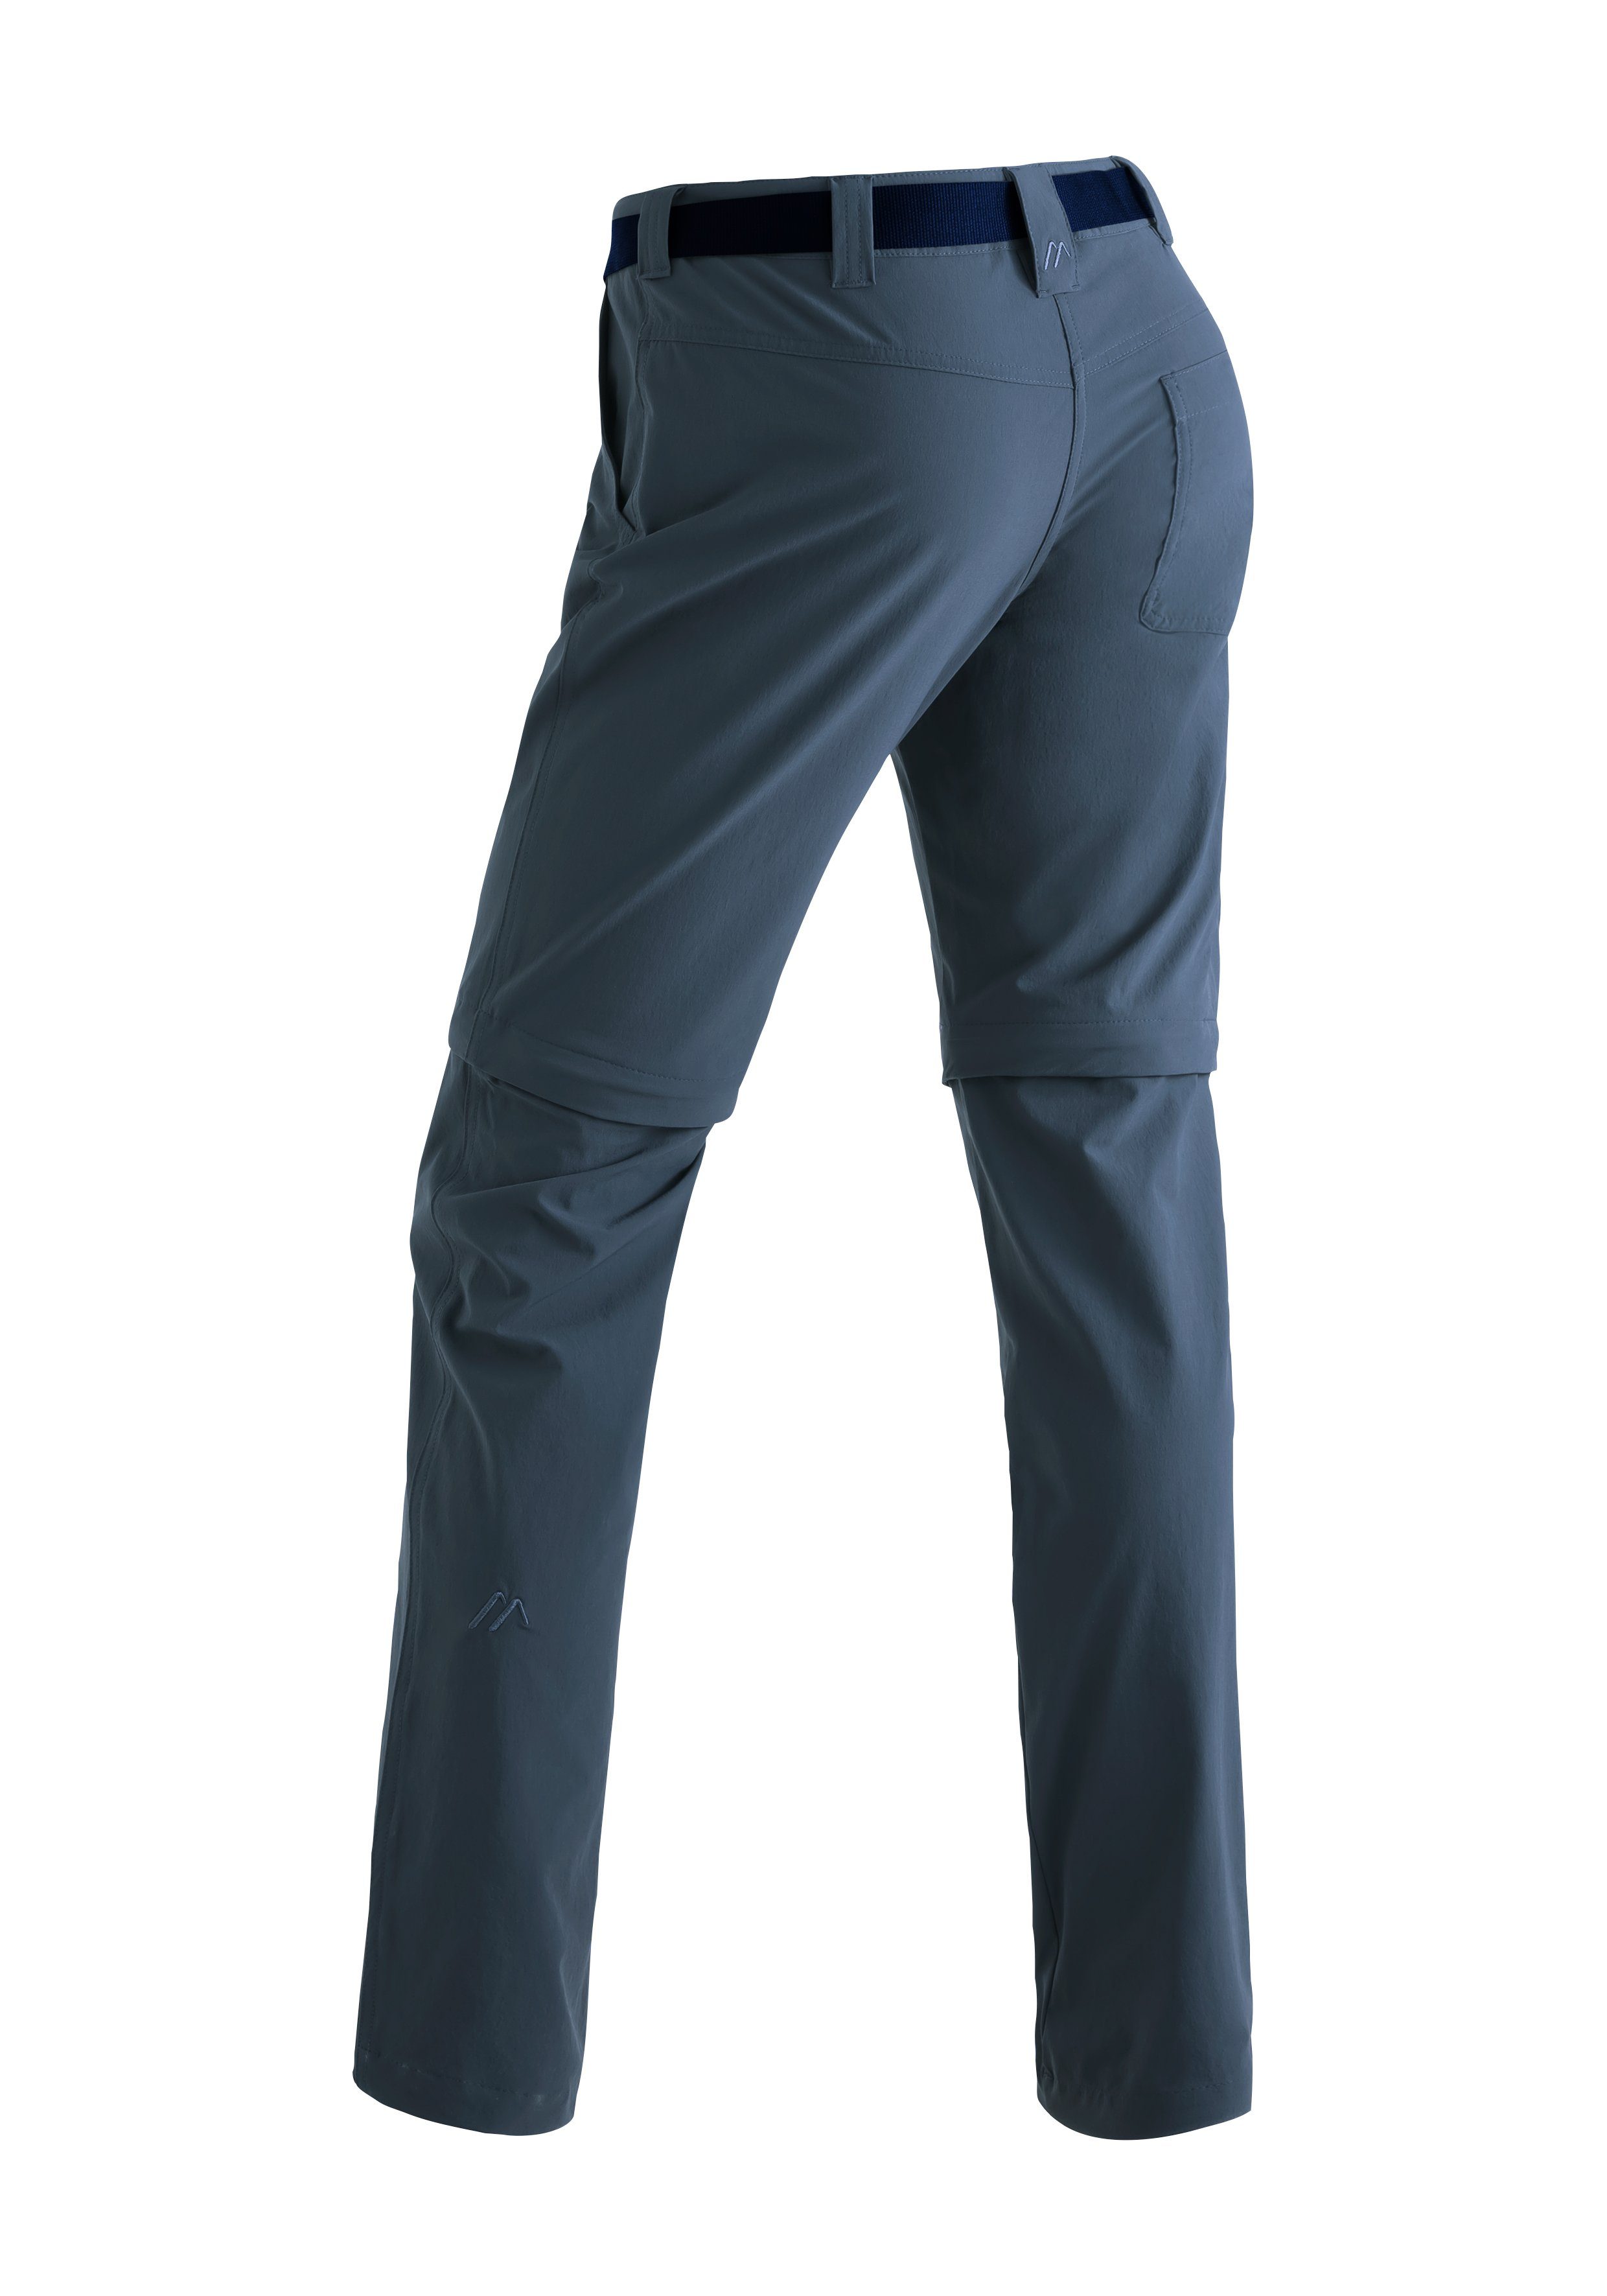 Funktionshose Sports zipp-off Inara Damen Maier slim zip Wanderhose, atmungsaktive jeansblau Outdoor-Hose